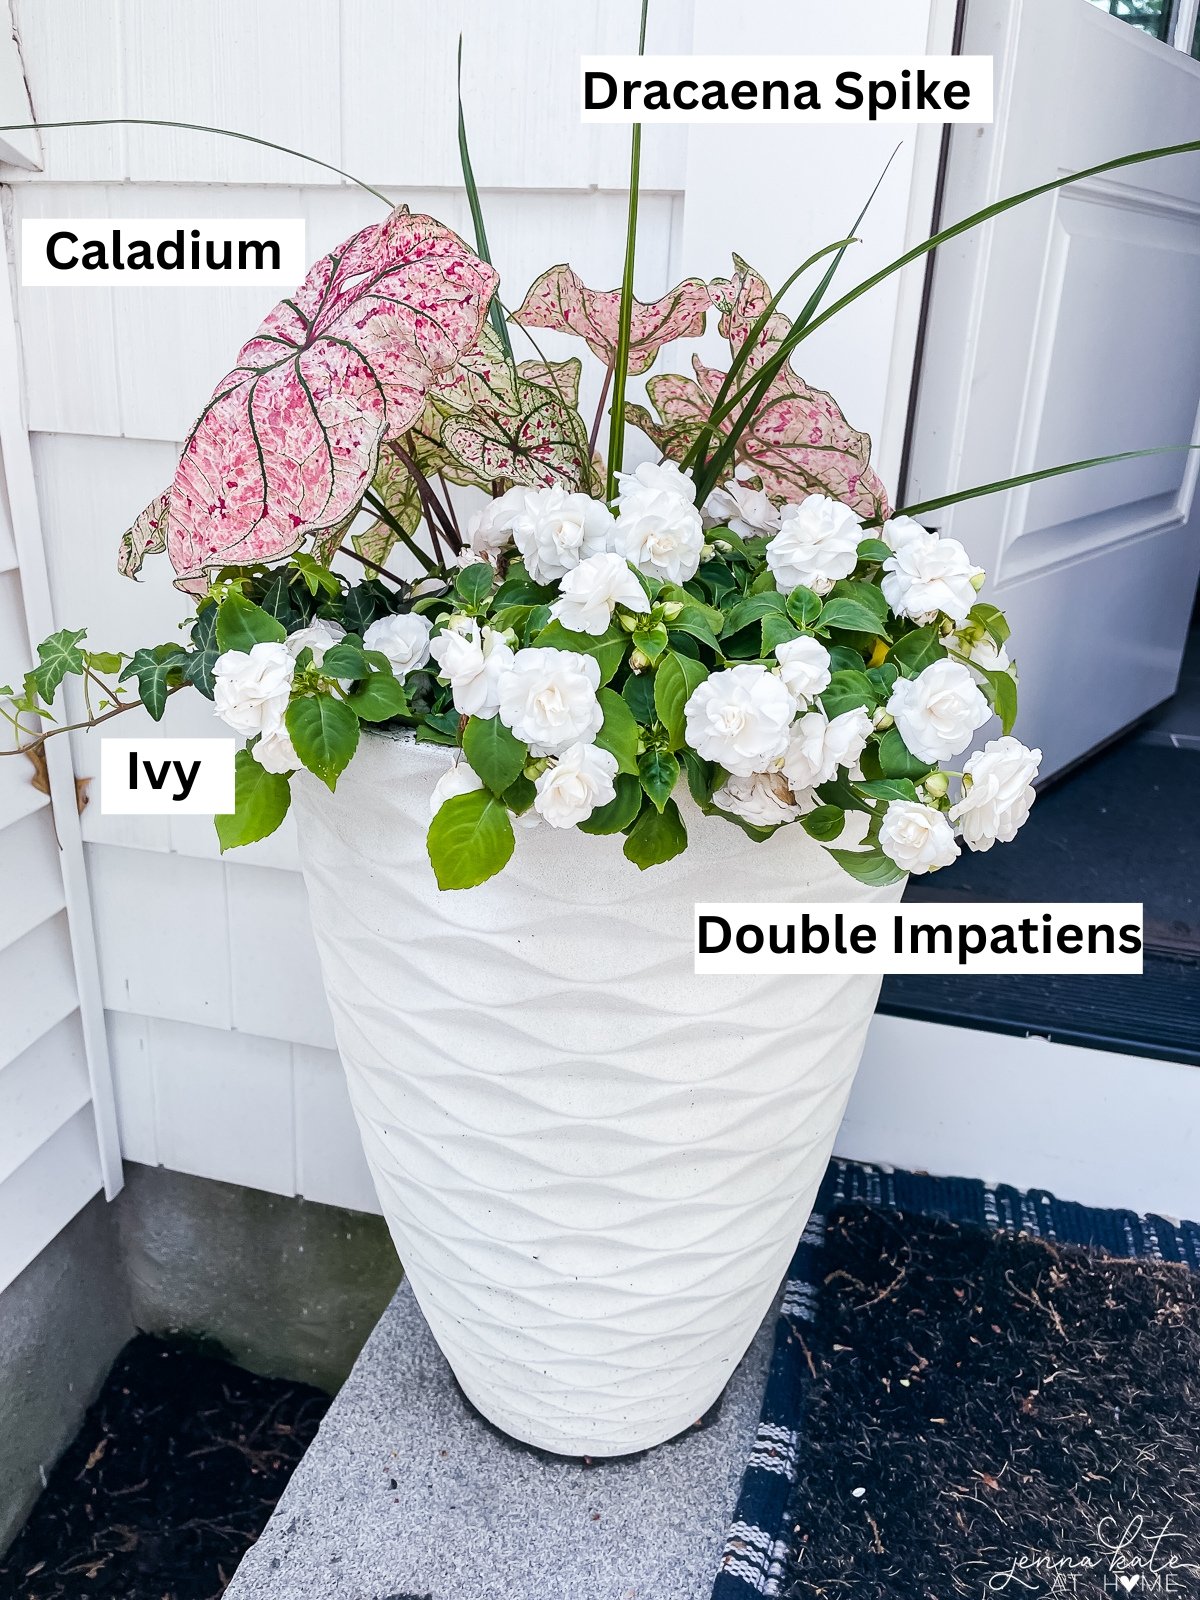 Part-sun planter with Caladkium (elephant ears), Draecena spike, double impatiens and ivy